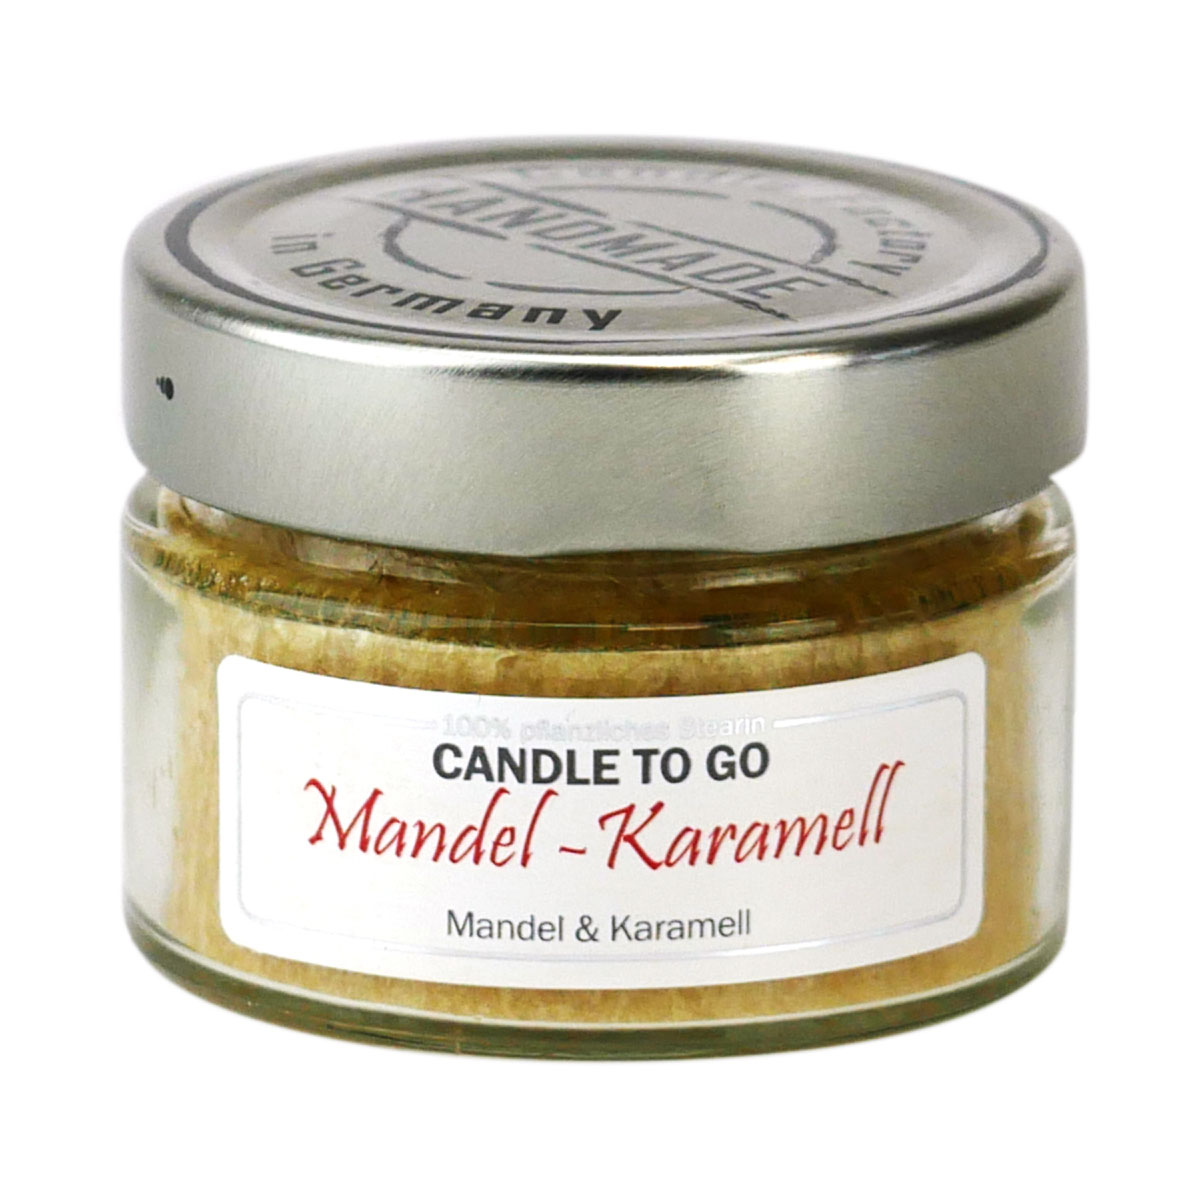 Mandel Karamell - Candle to Go Duftkerze von Candle Factory